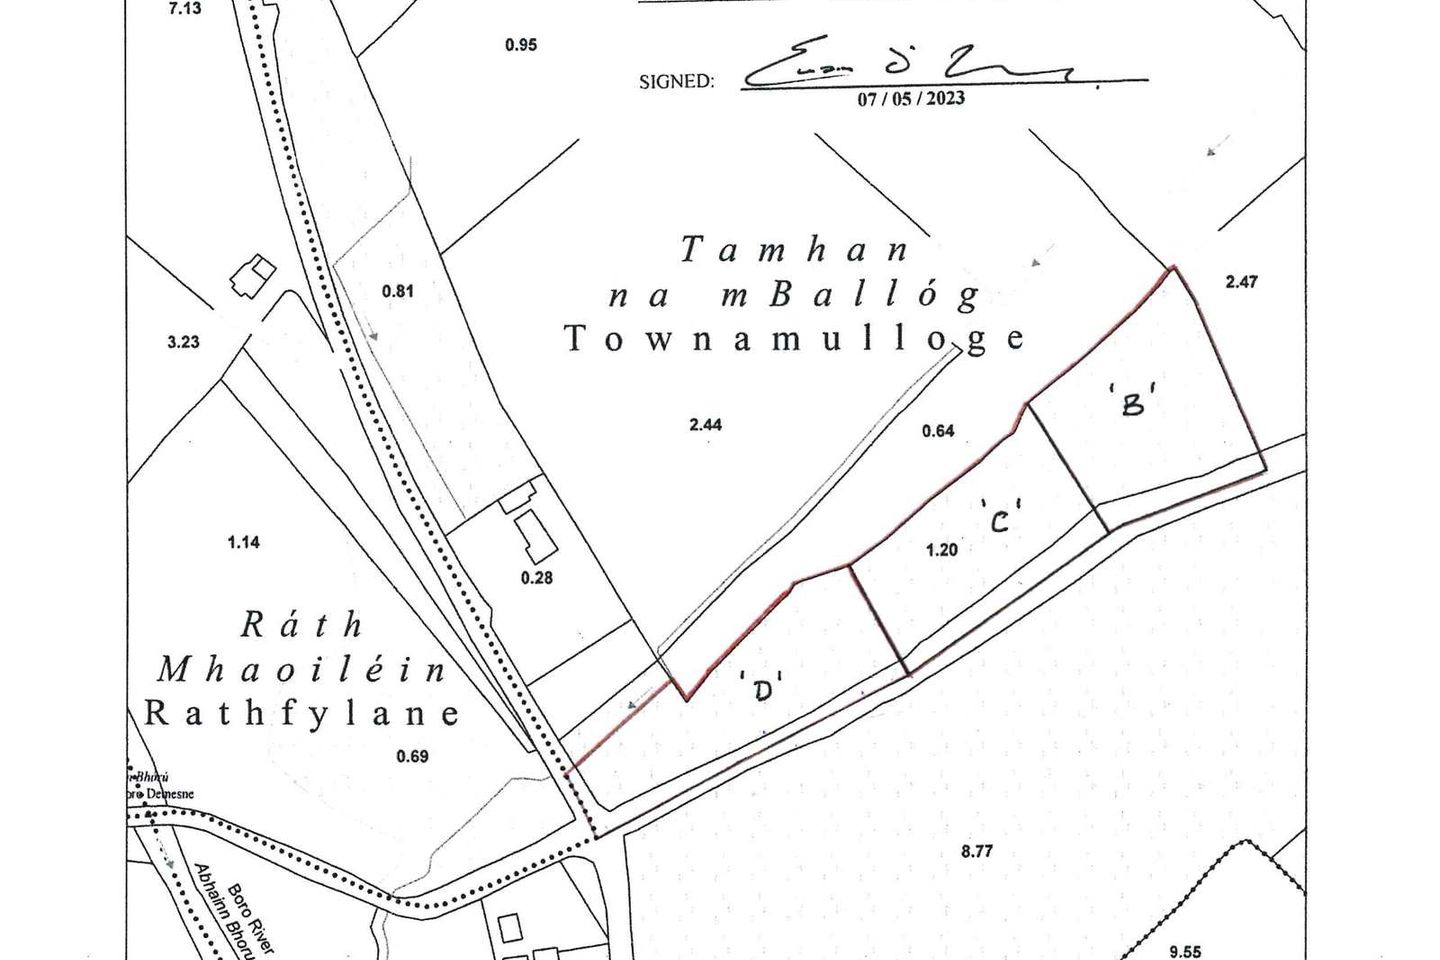 Townamulloge, Clonroche, Enniscorthy, Co. Wexford